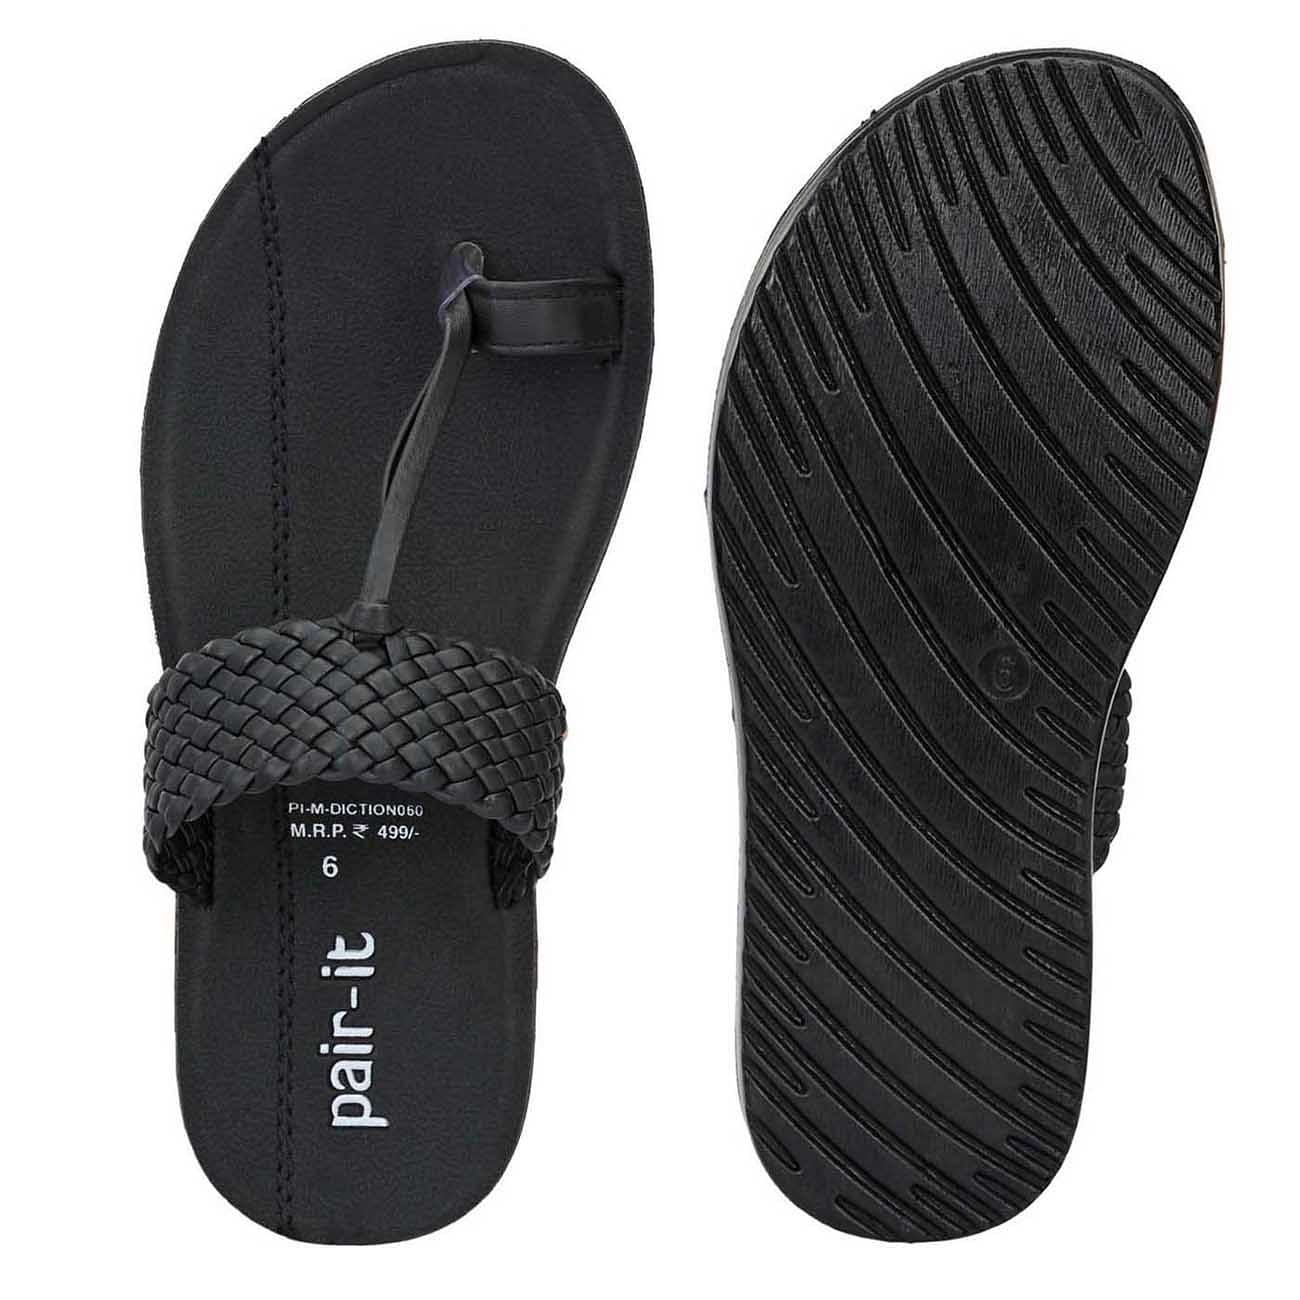 Pair-it Men's PU Slippers - DICTION060 - Black